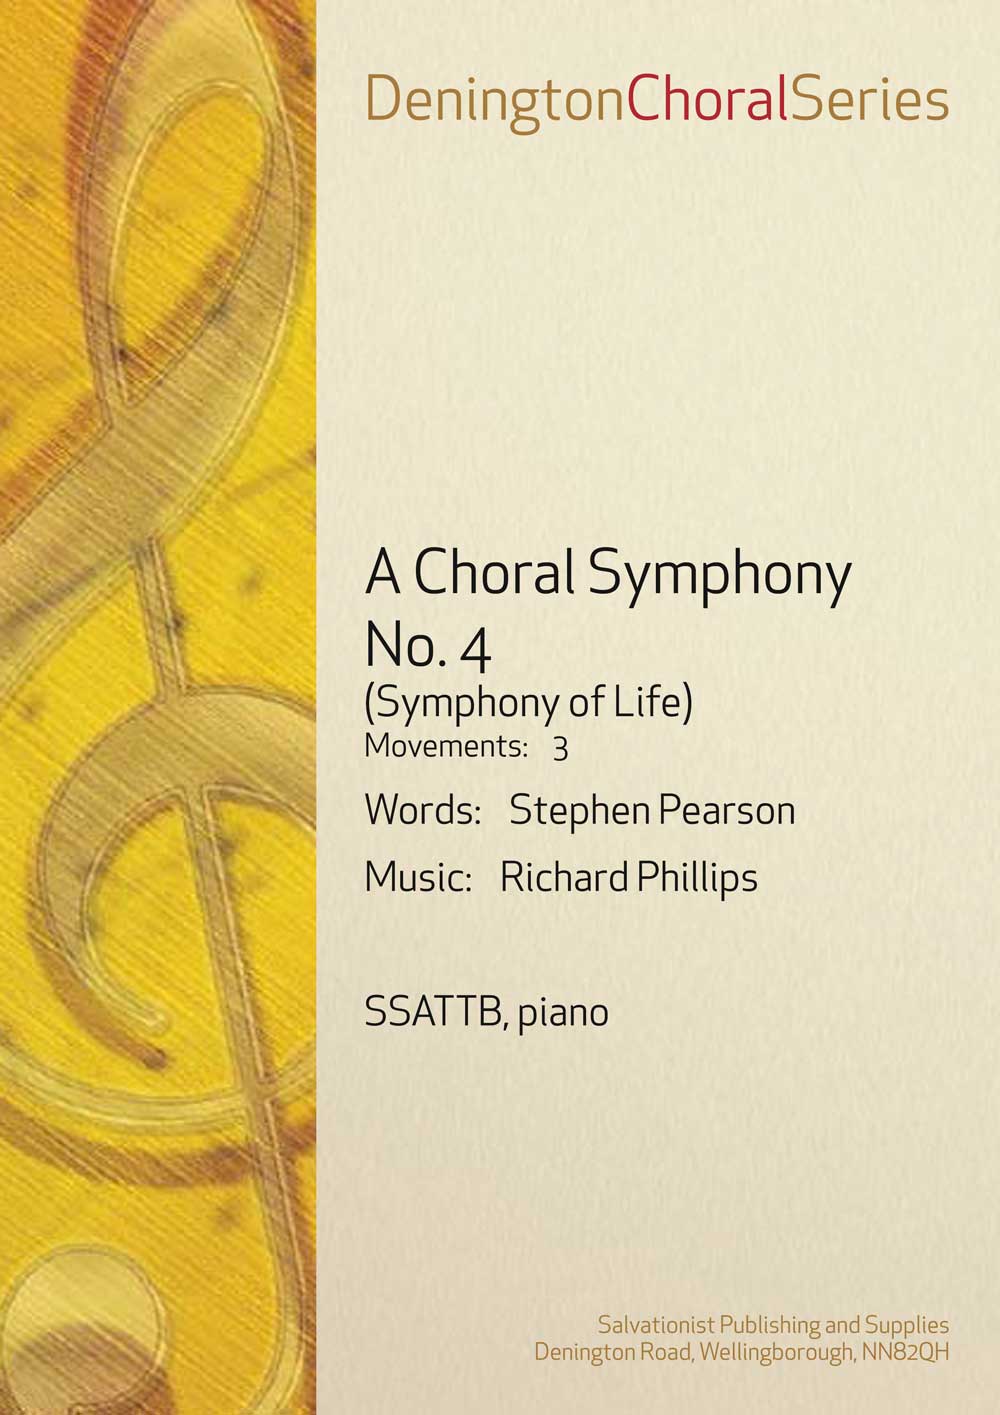 Choral Symphony No.4, Movement 3 (SSATTB Choral Octavo)